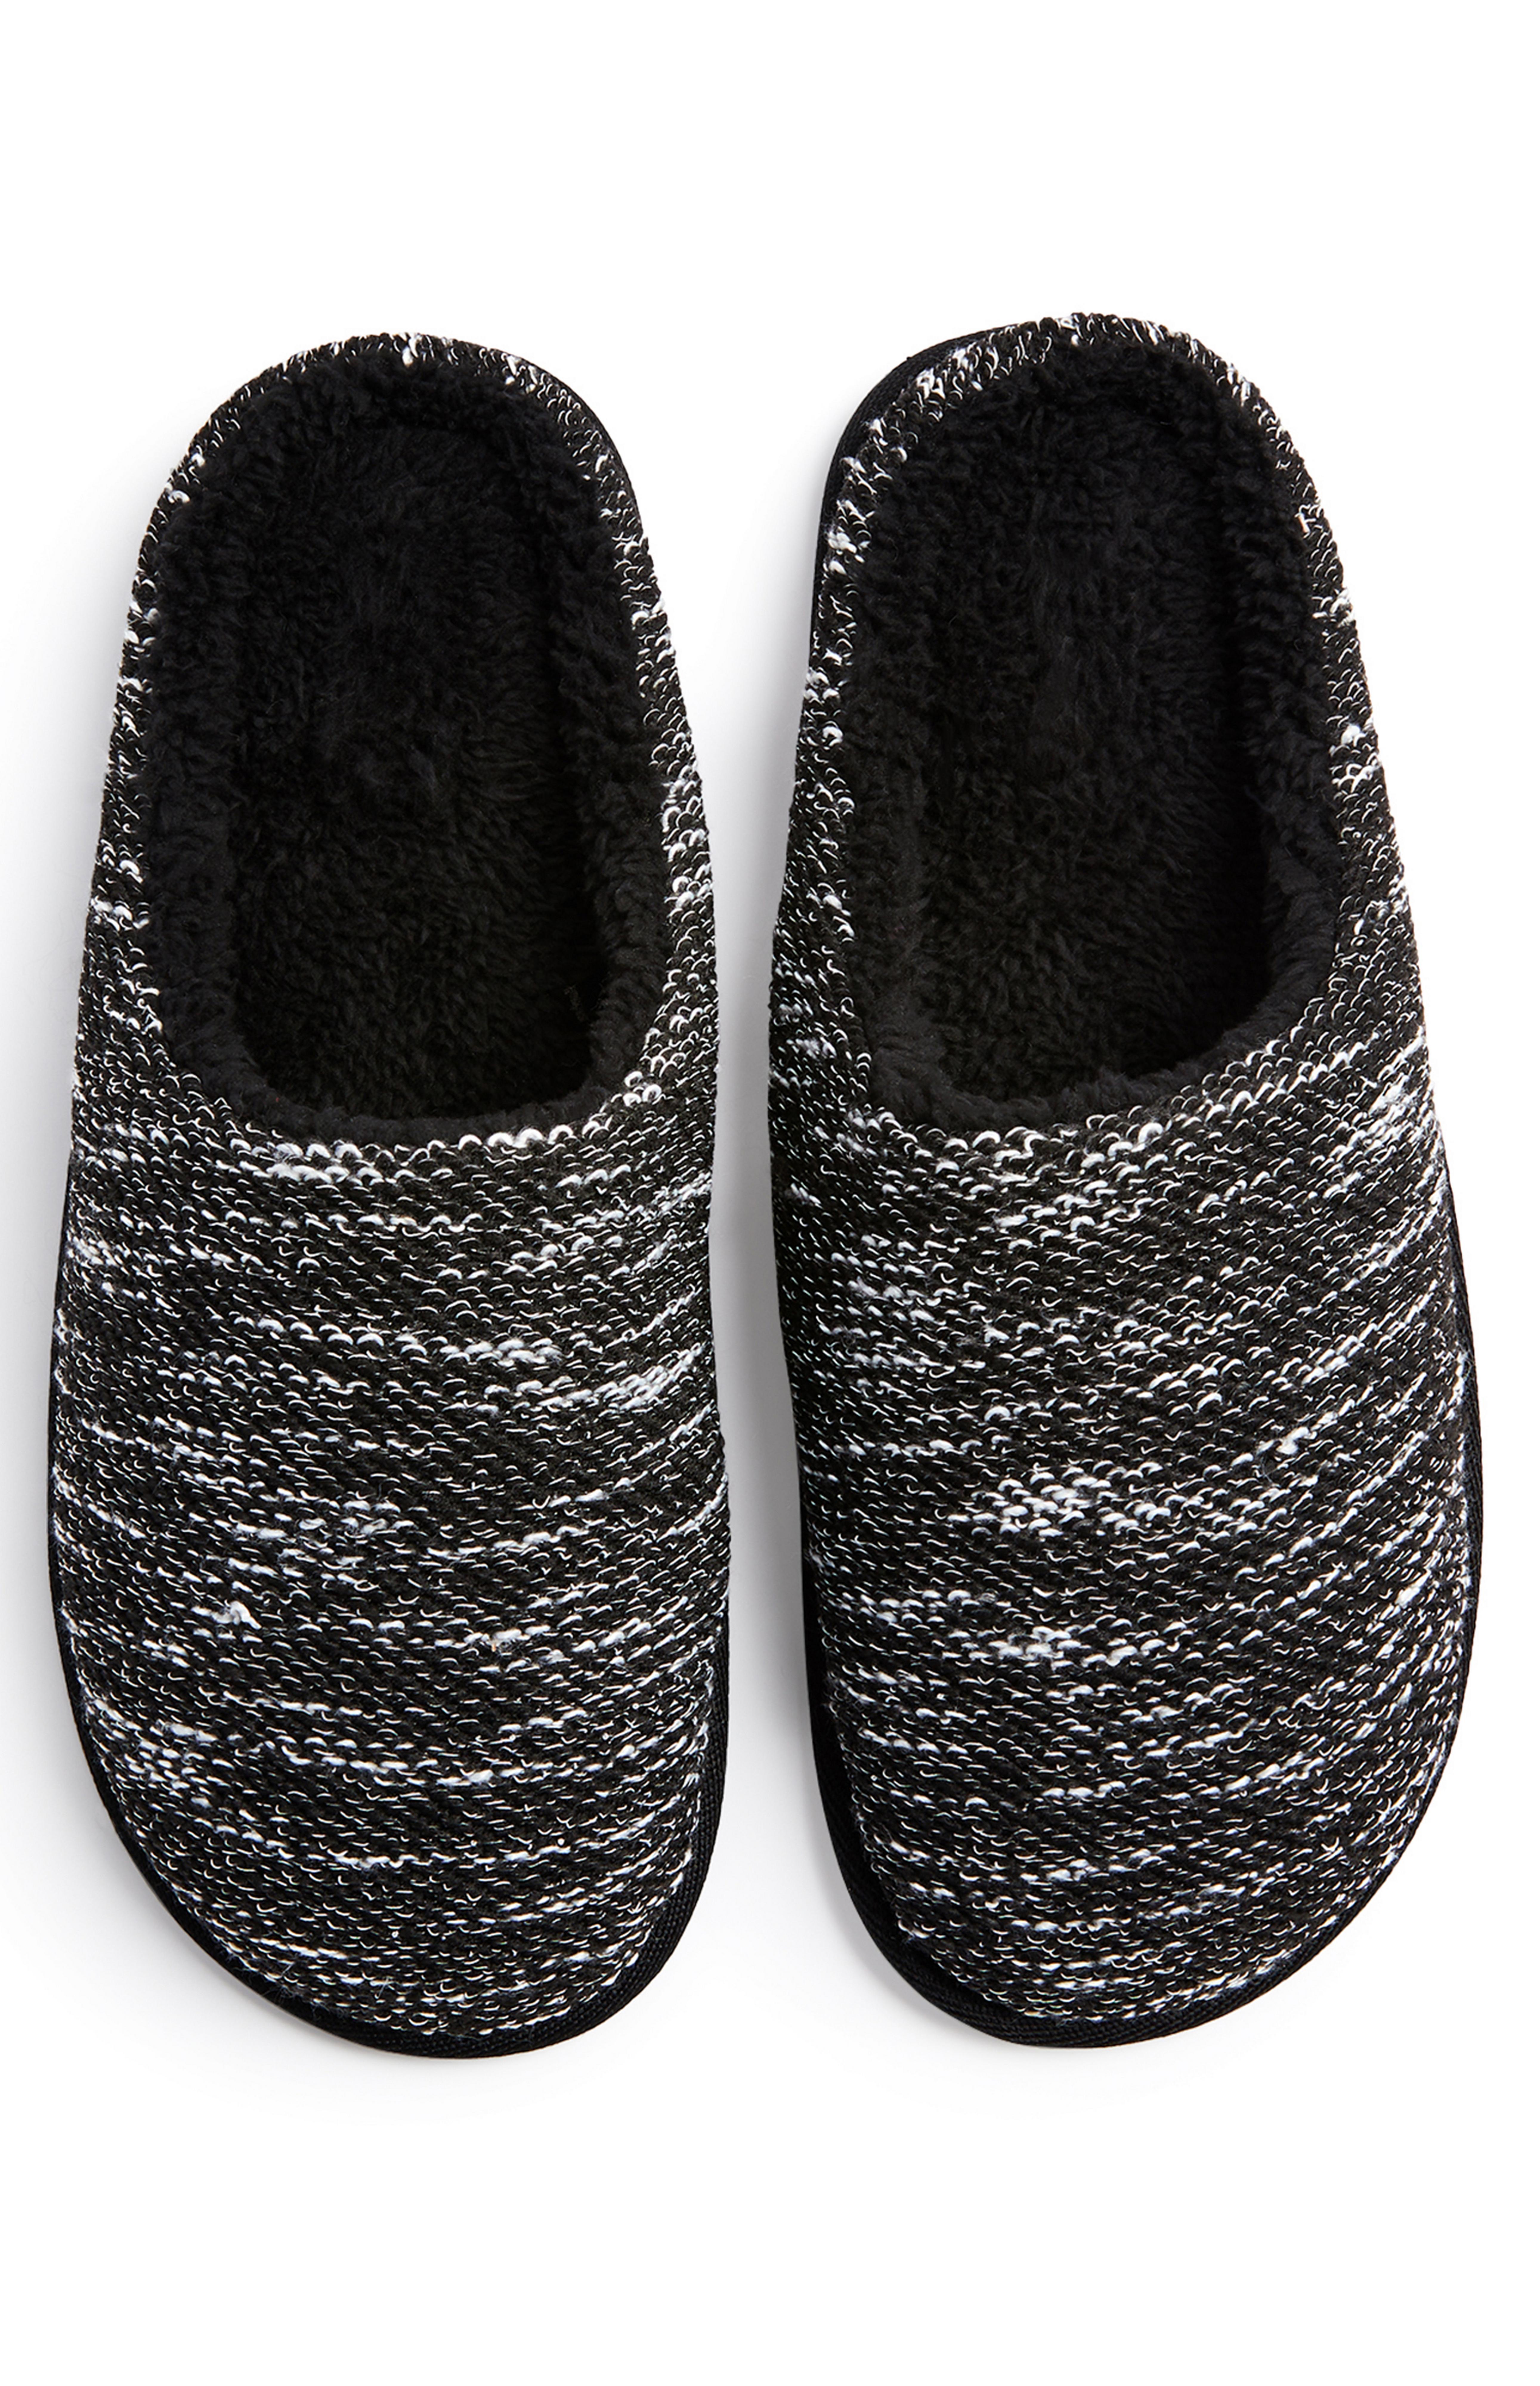 primark boys slippers